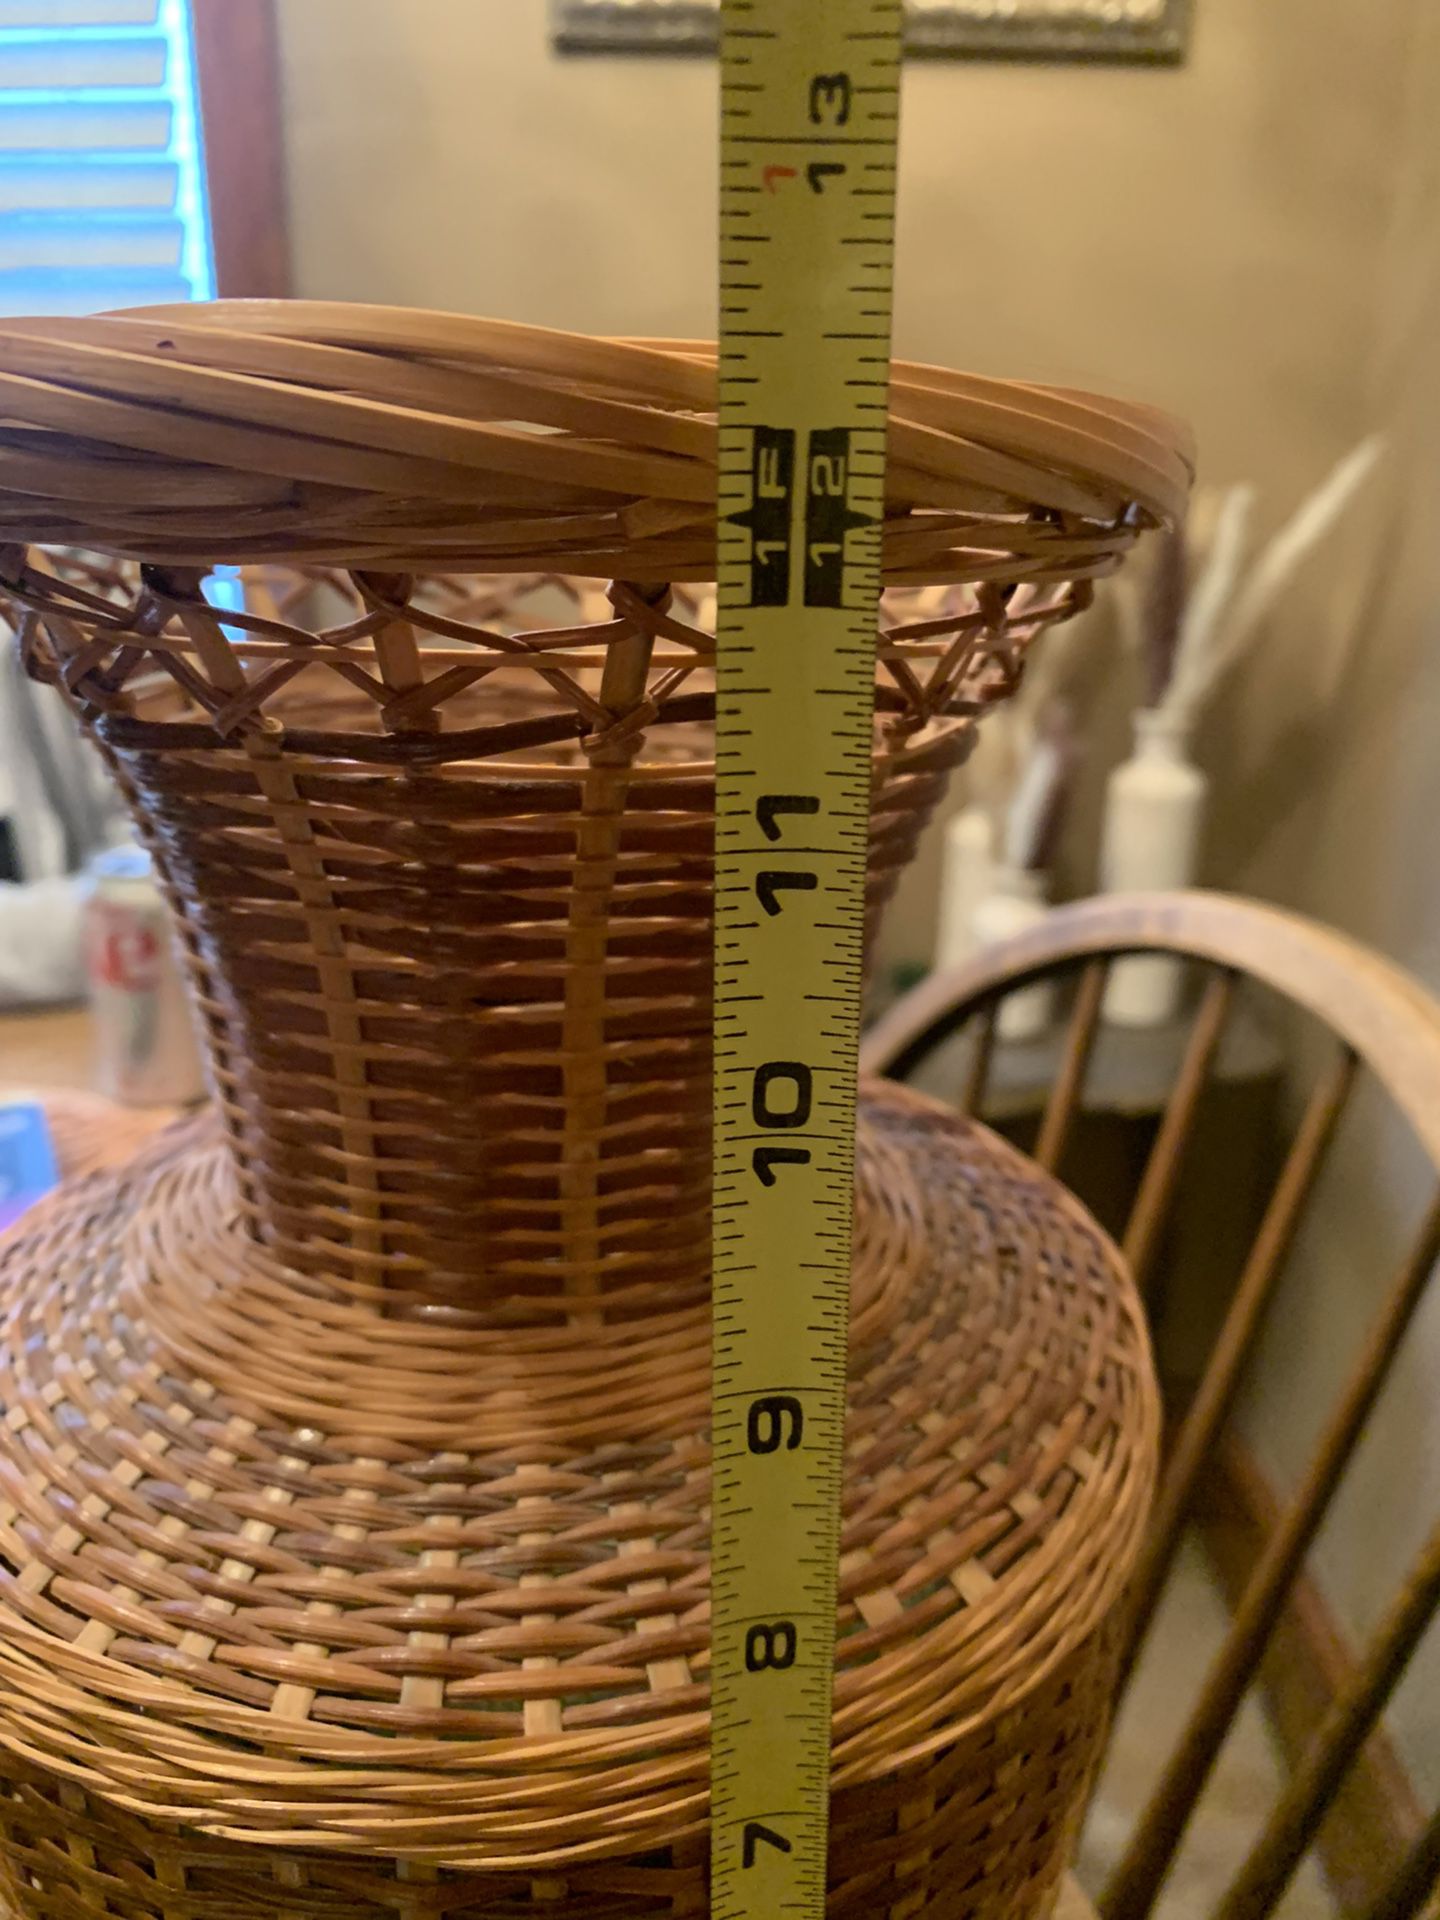 Wicker Basket Vase 